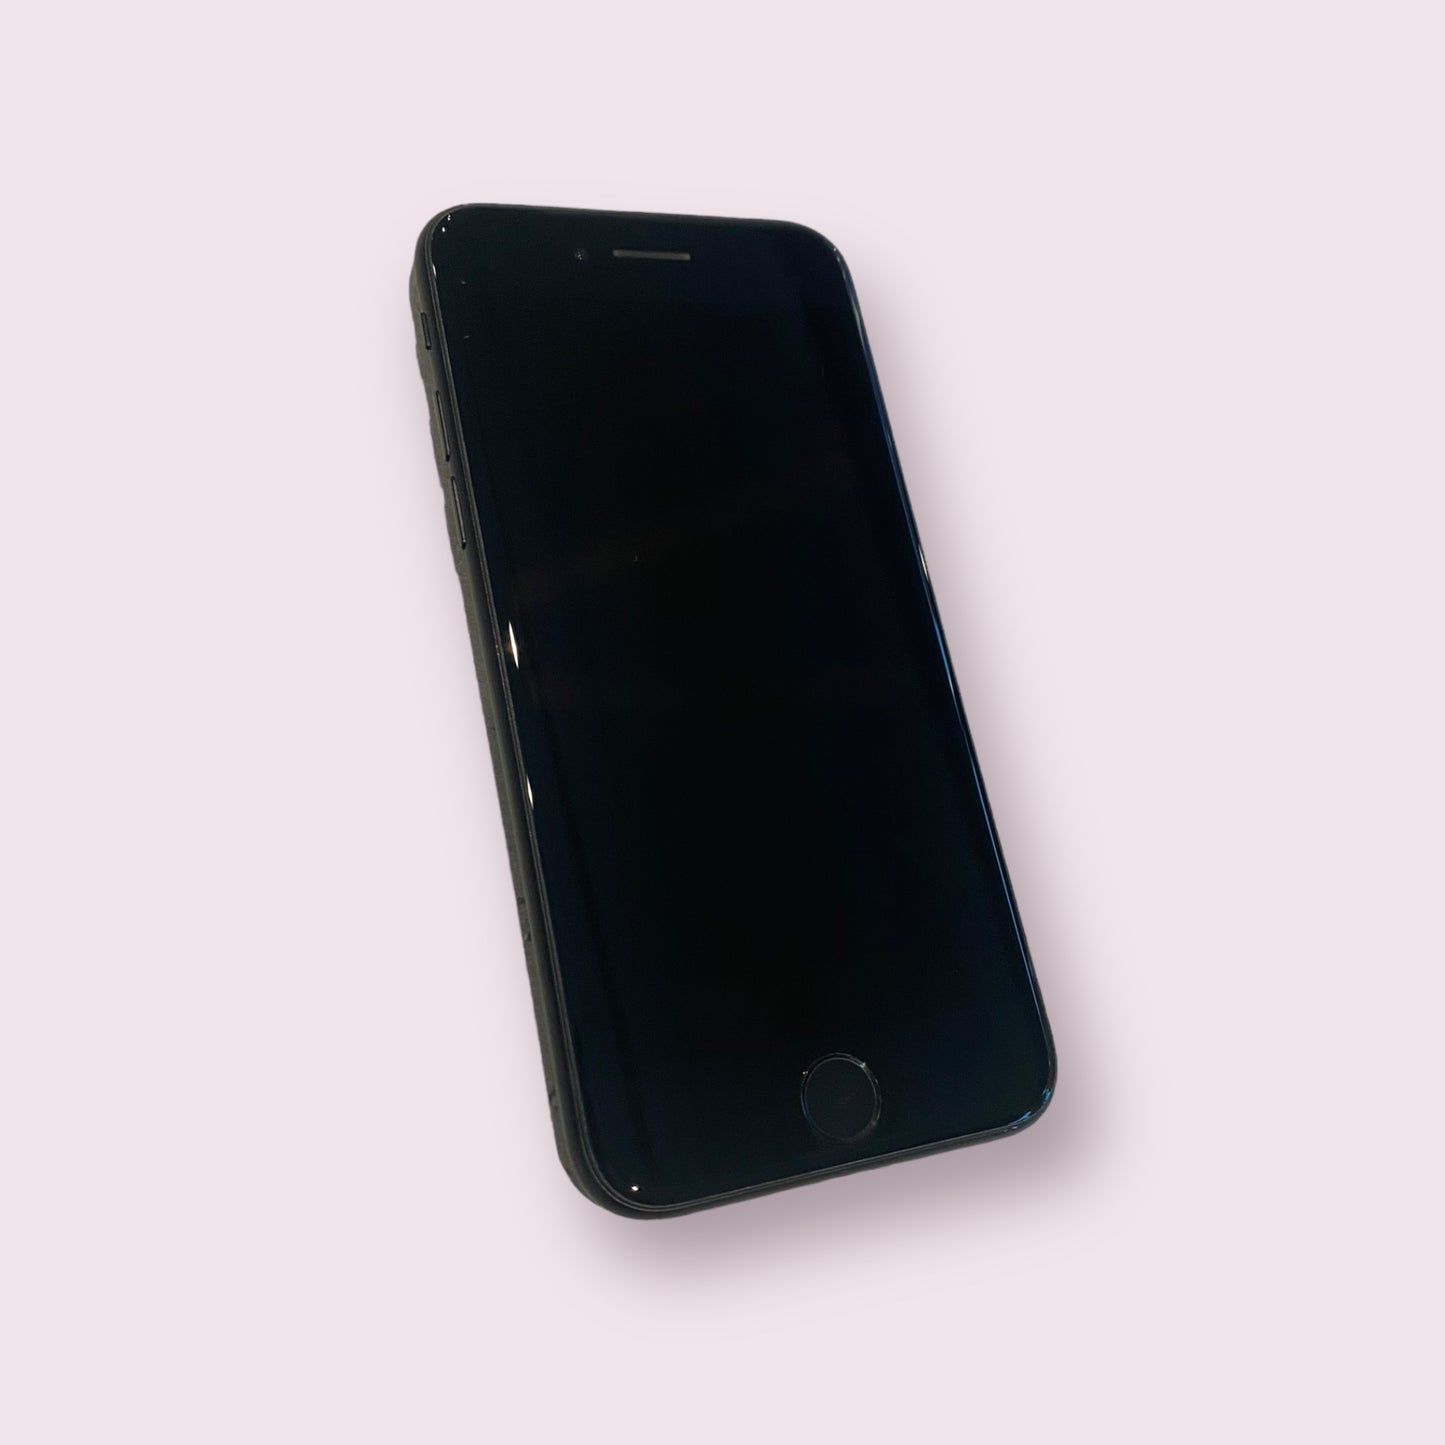 Apple iPhone SE 2020 128GB Black - Unlocked - Grade A - BH 100%